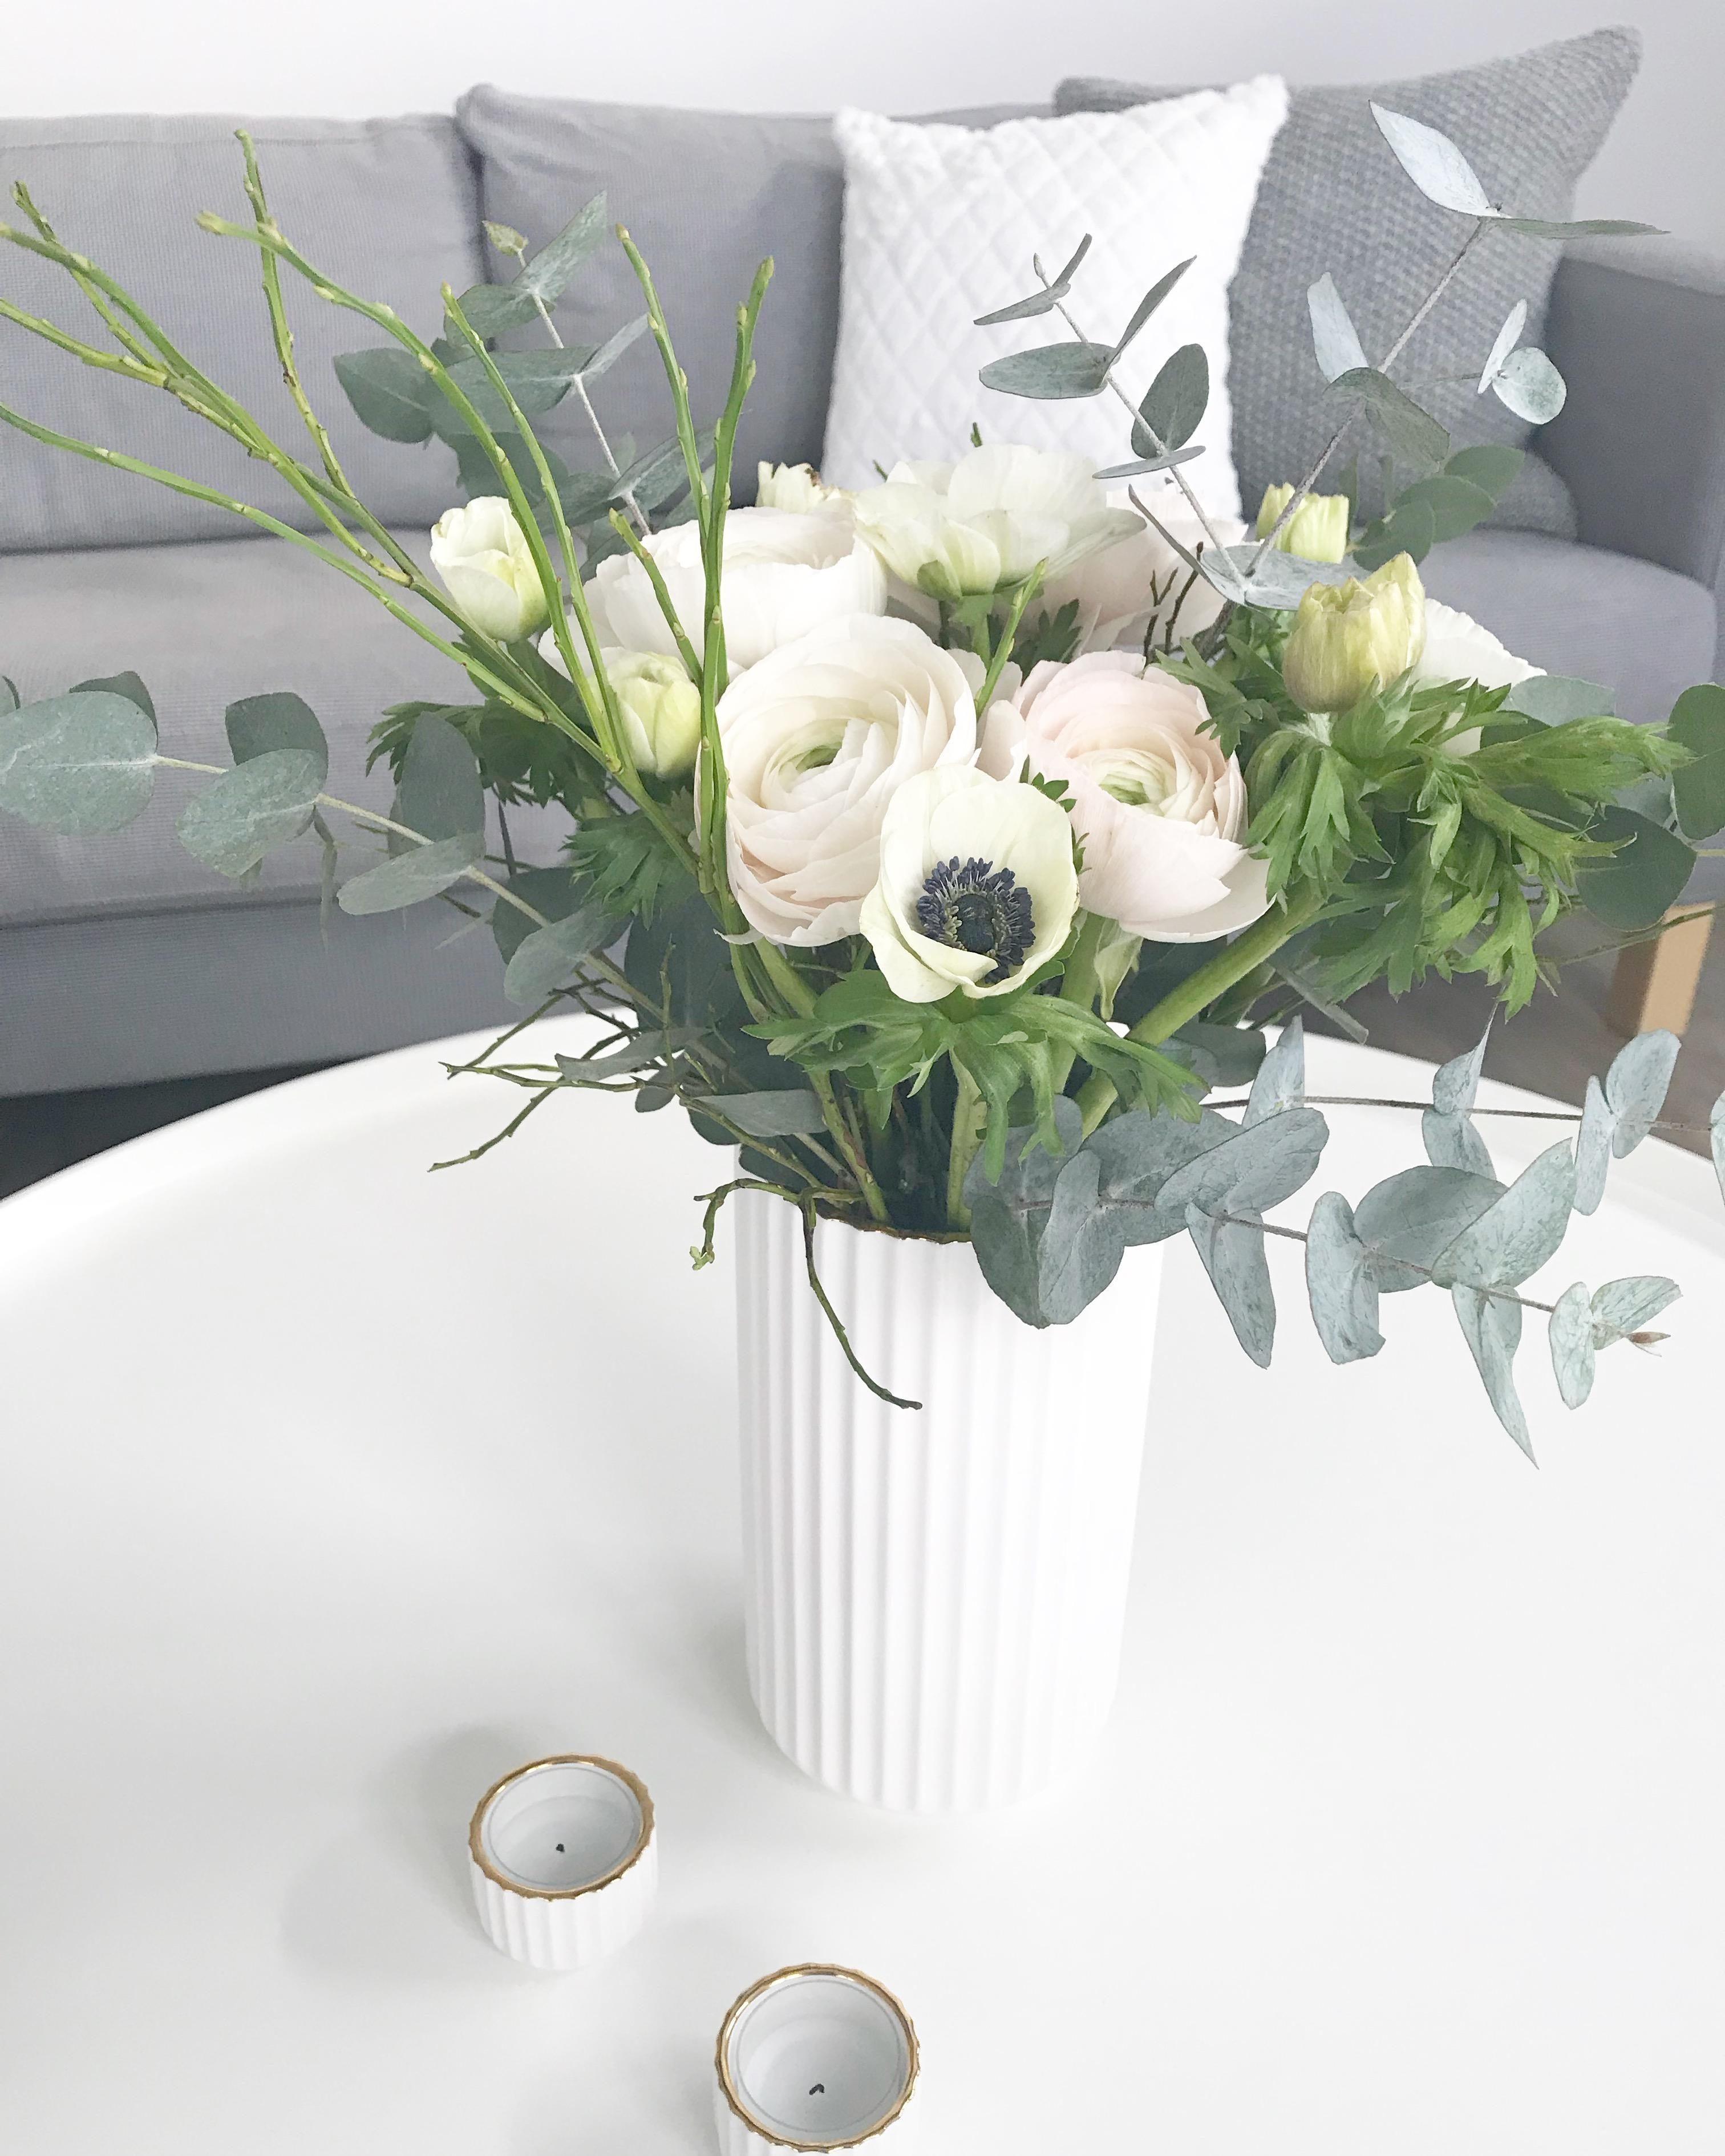 #springvibes #freshflowers #interiordesign #interiorinspiration #livingroom #lyngby